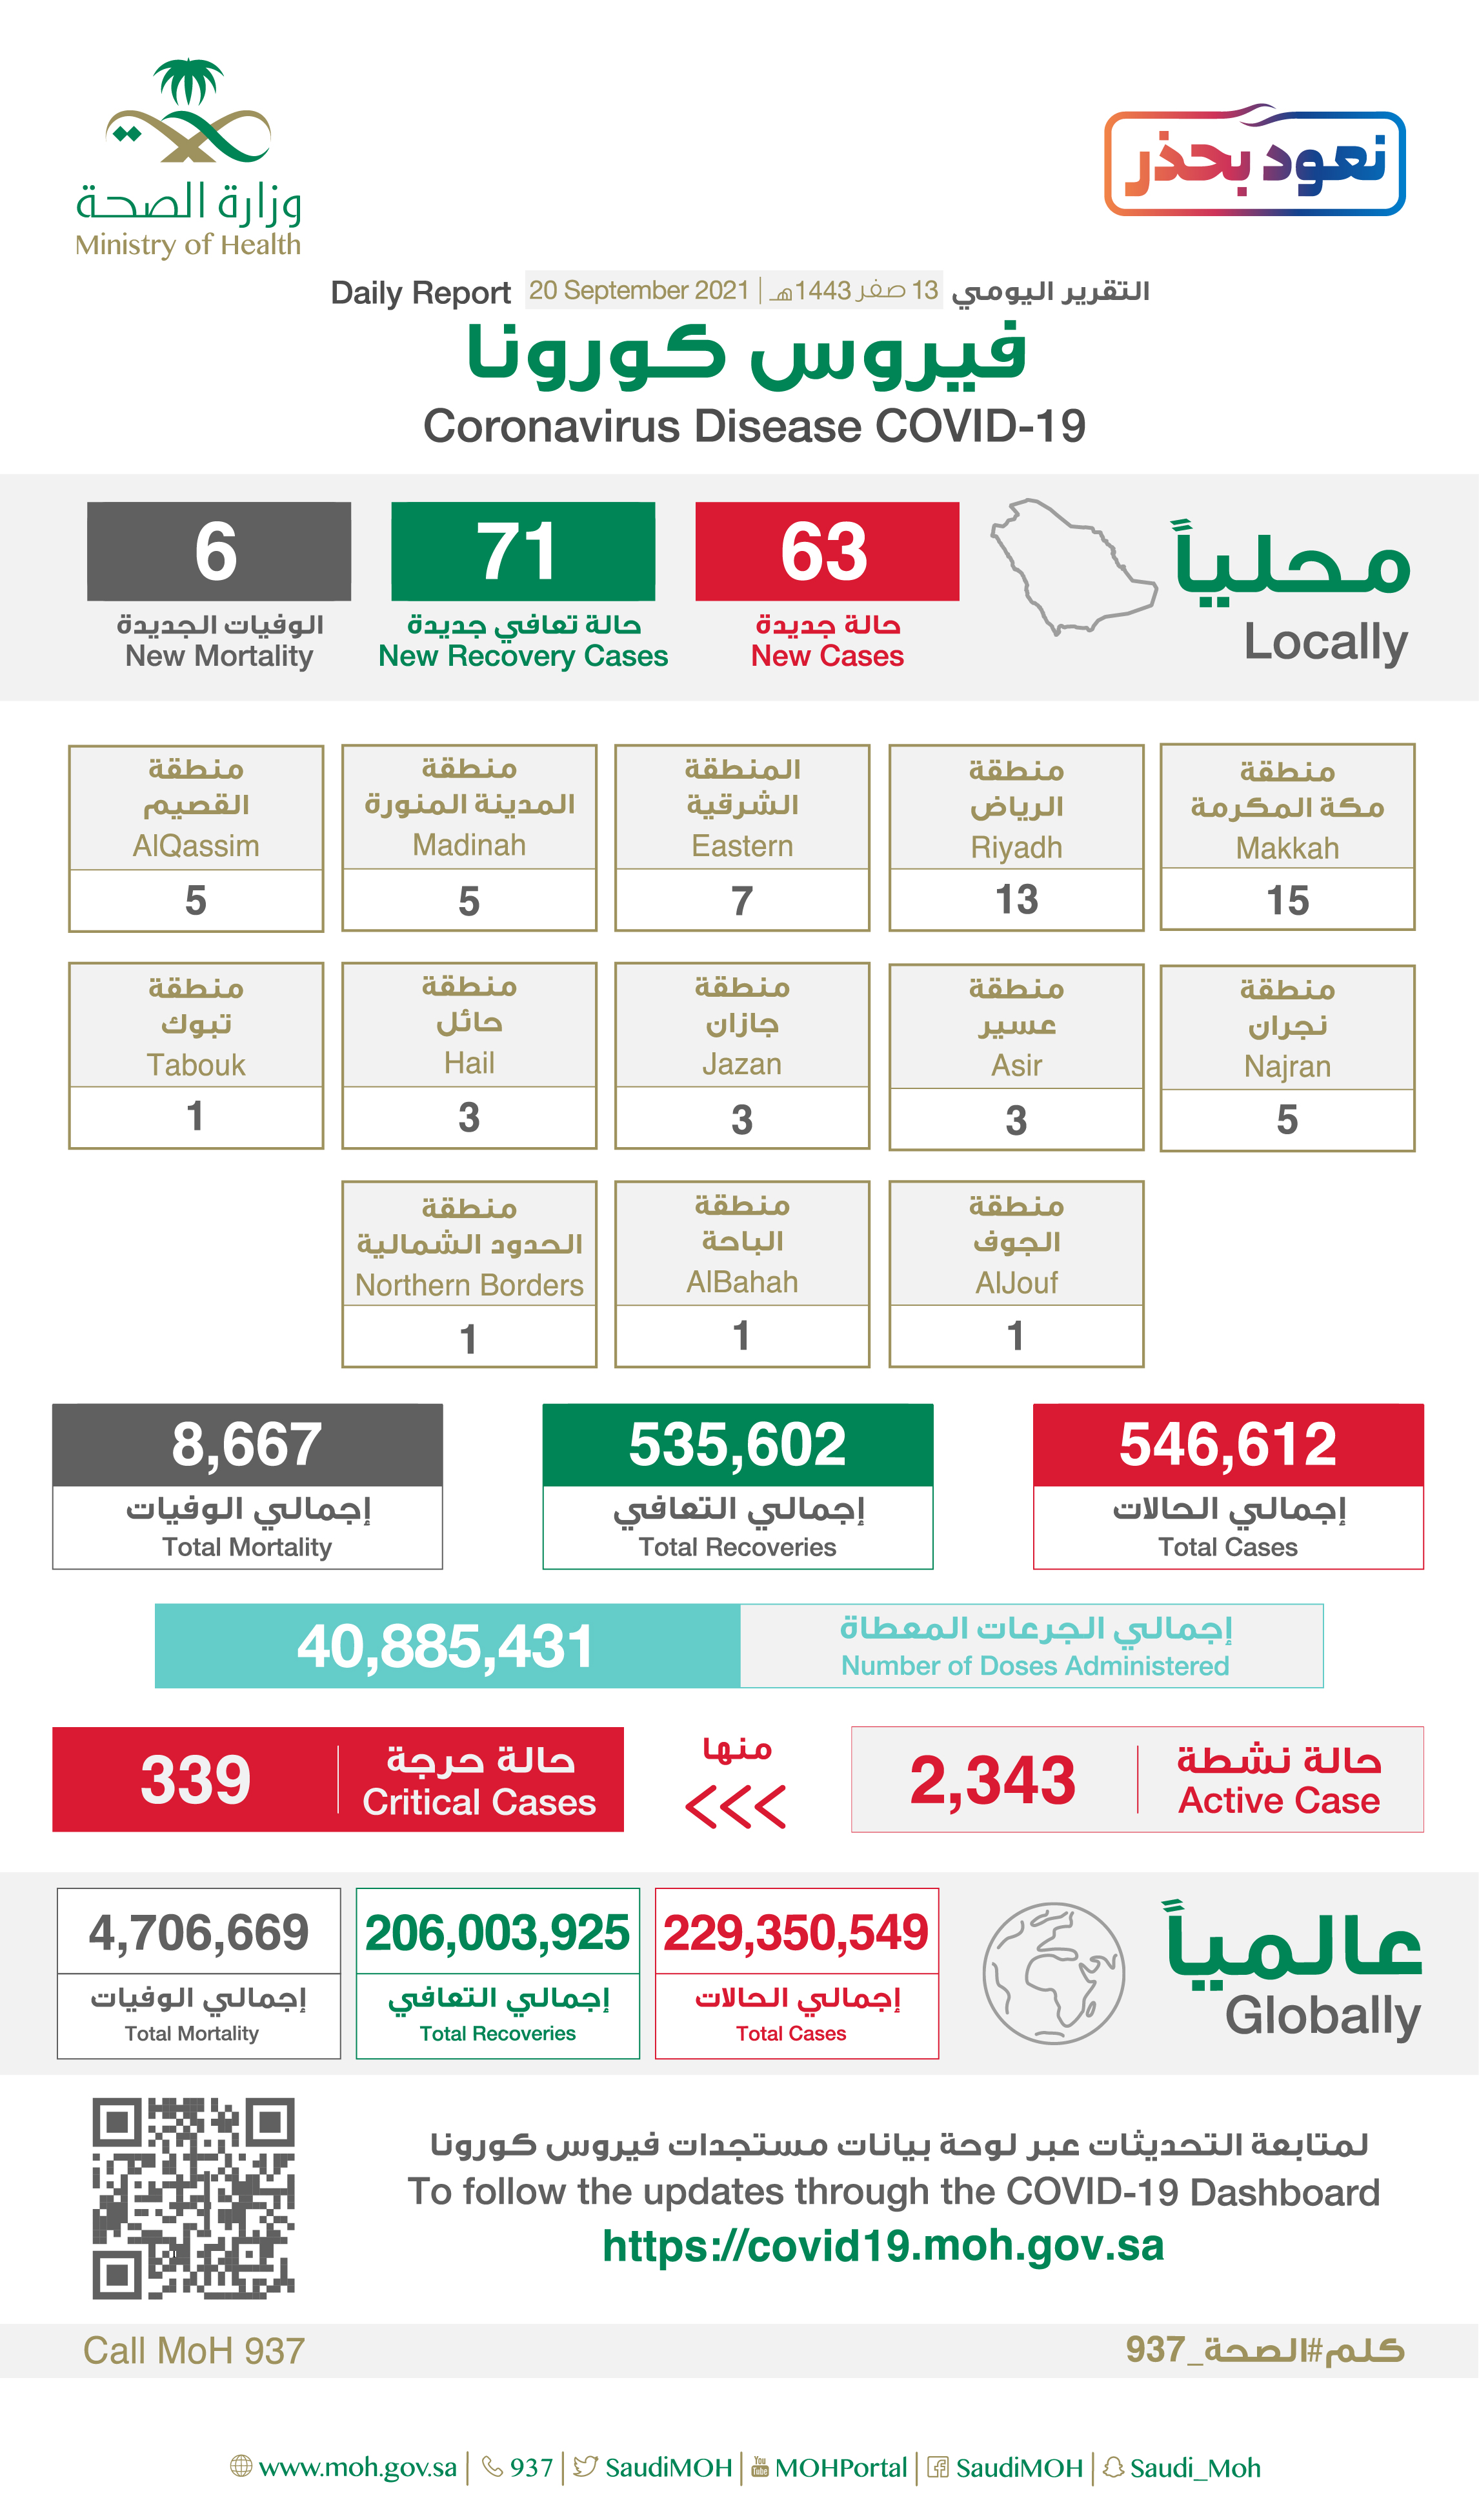 Saudi Arabia Coronavirus : Total Cases : 546,612 , New Cases : 63, Cured : 535,602 , Deaths: 8,667, Active Cases : 2,343